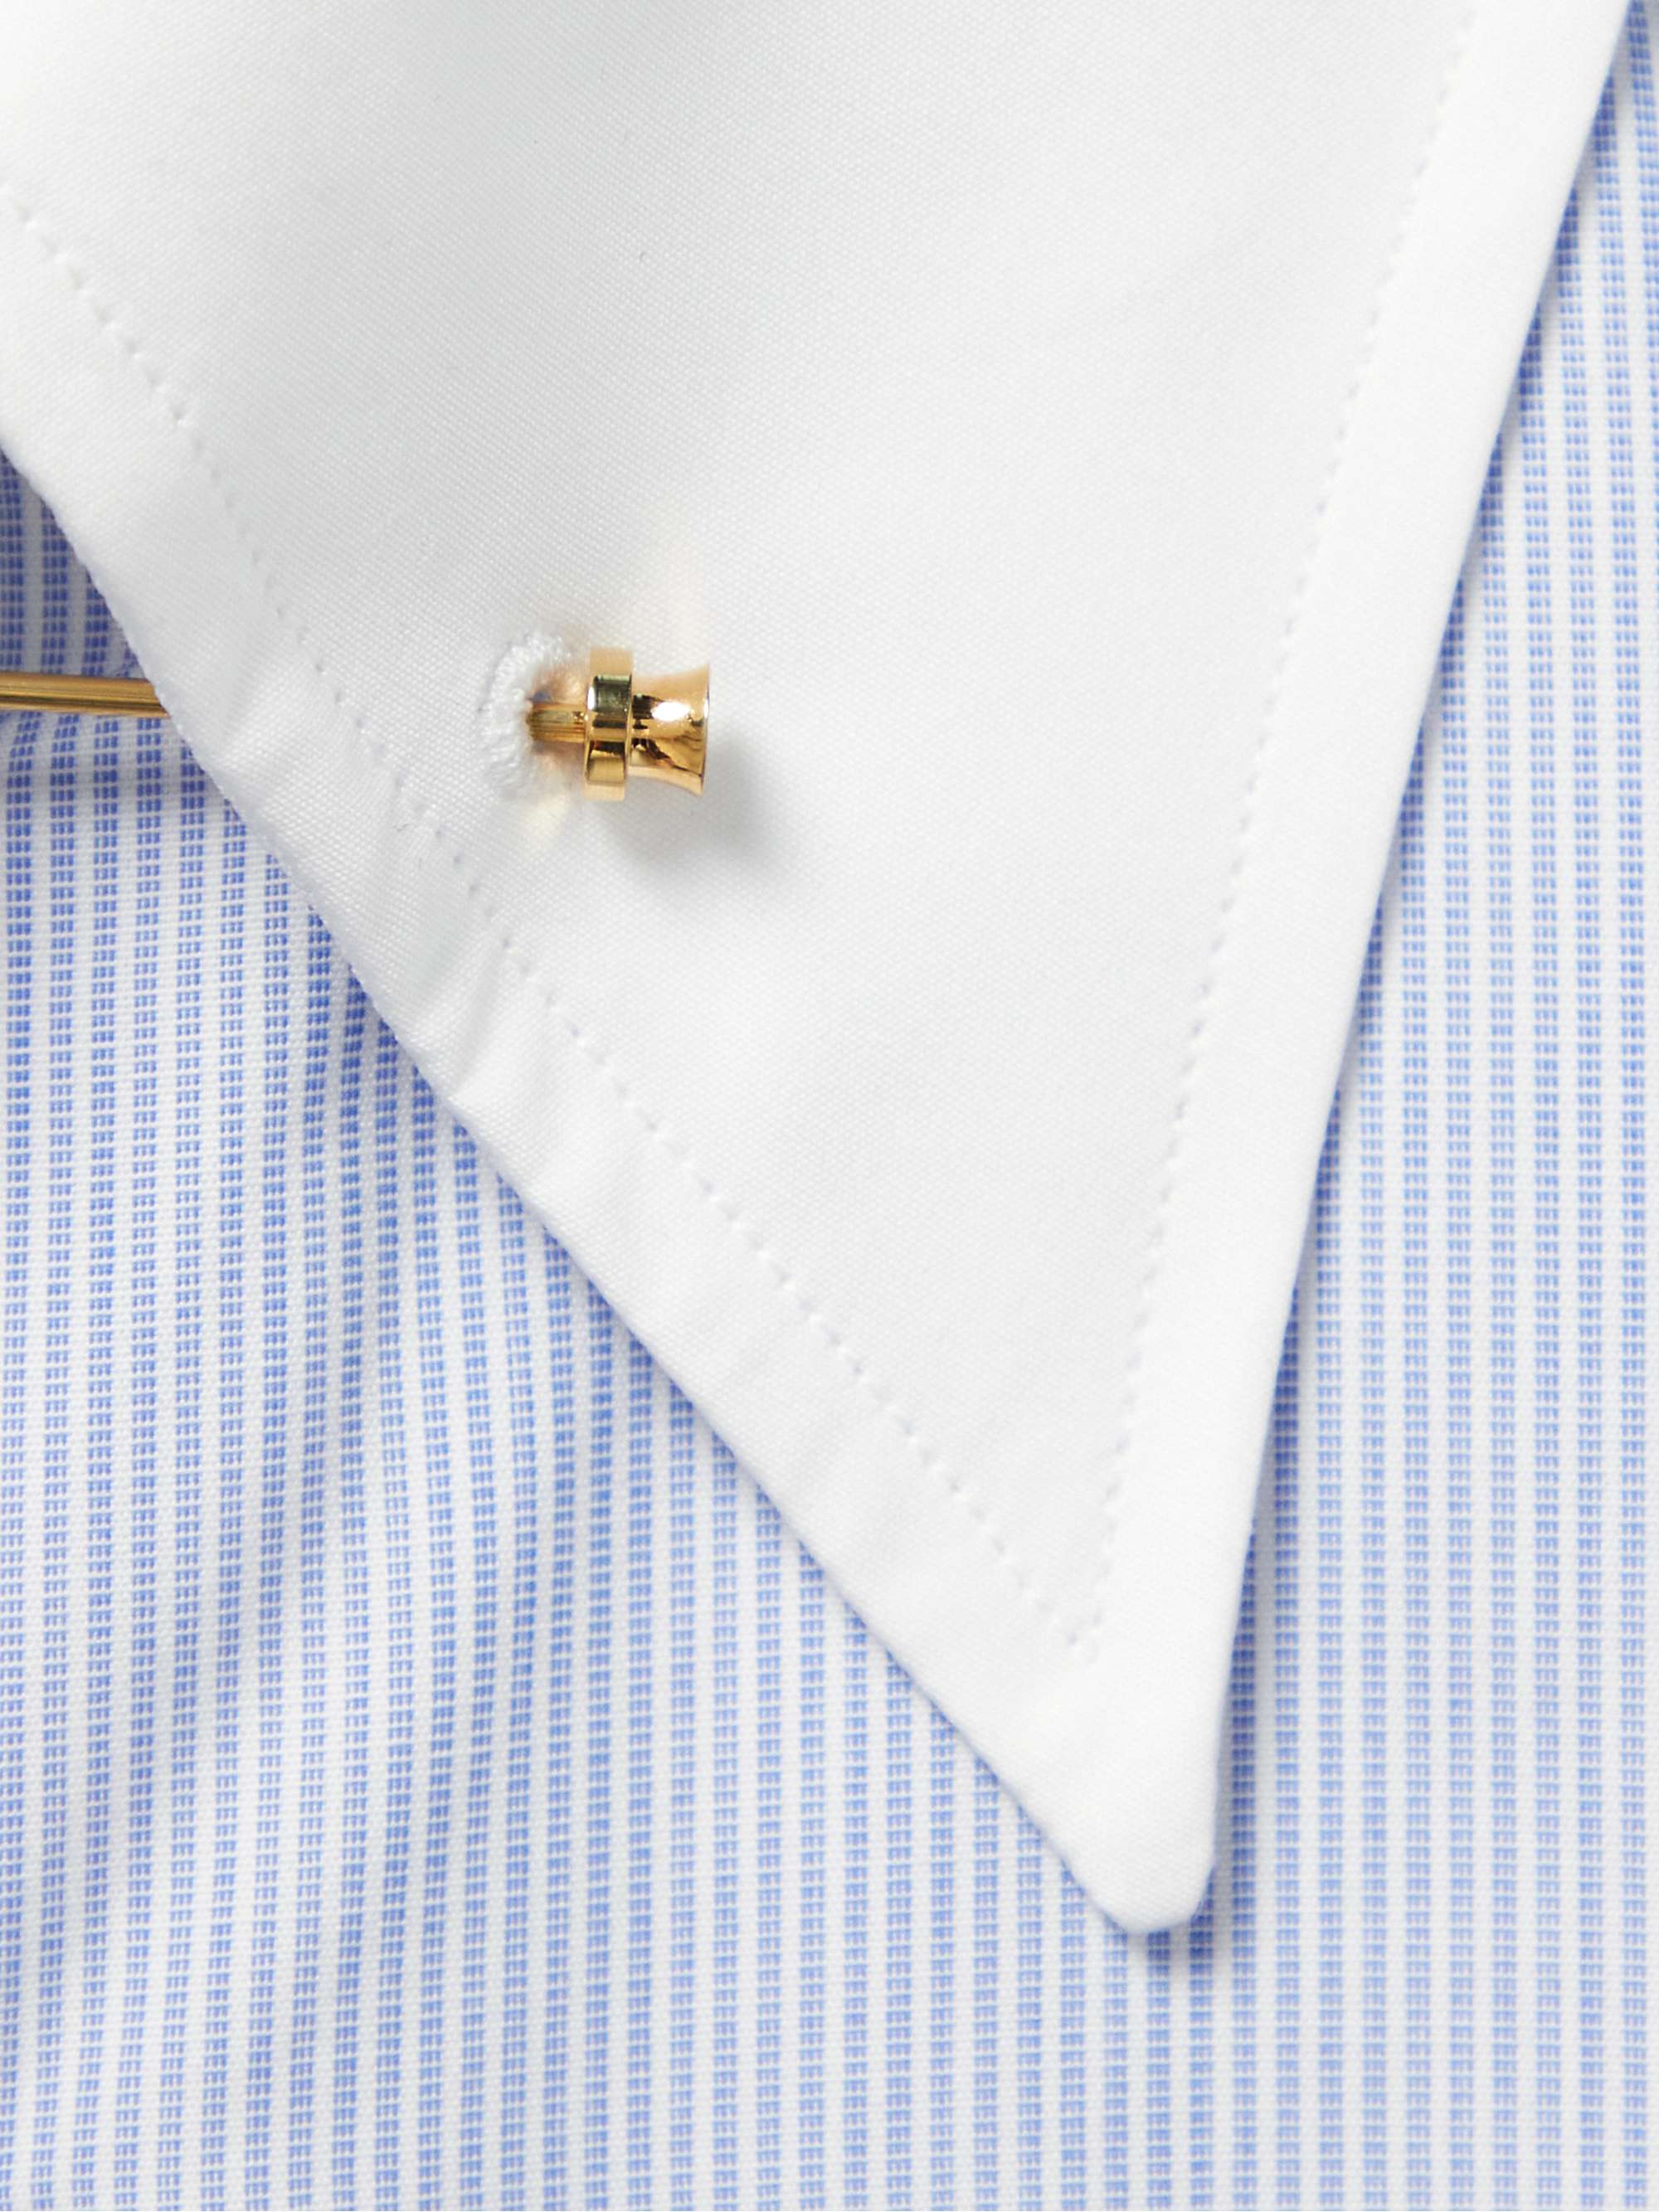 KINGSMAN + Turnbull & Asser Pinned-Collar Striped Cotton Shirt